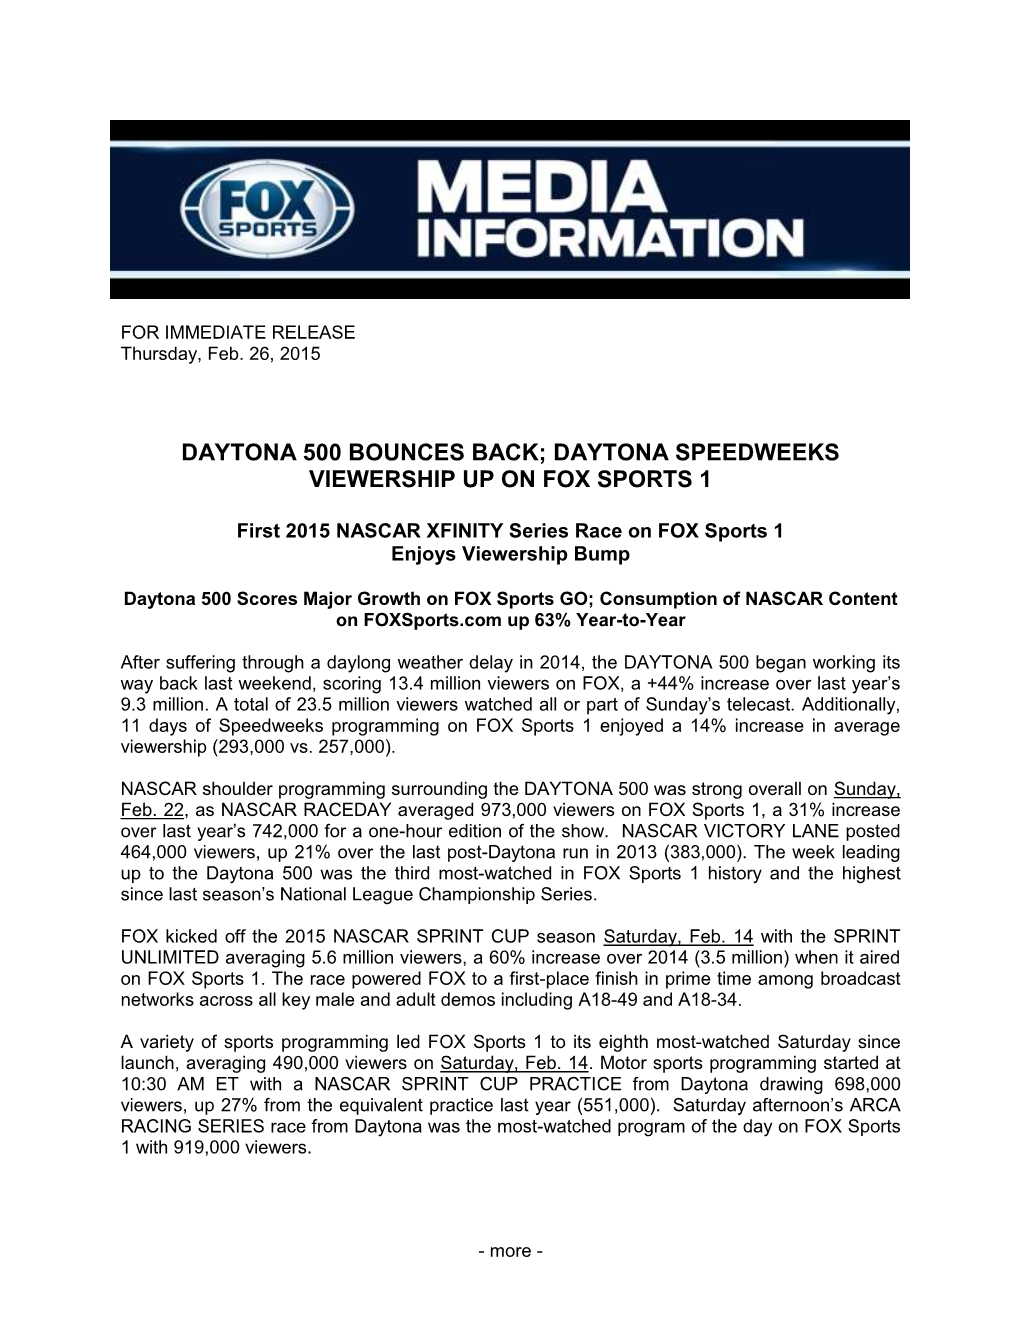 Daytona 500 Bounces Back; Daytona Speedweeks Viewership up on Fox Sports 1